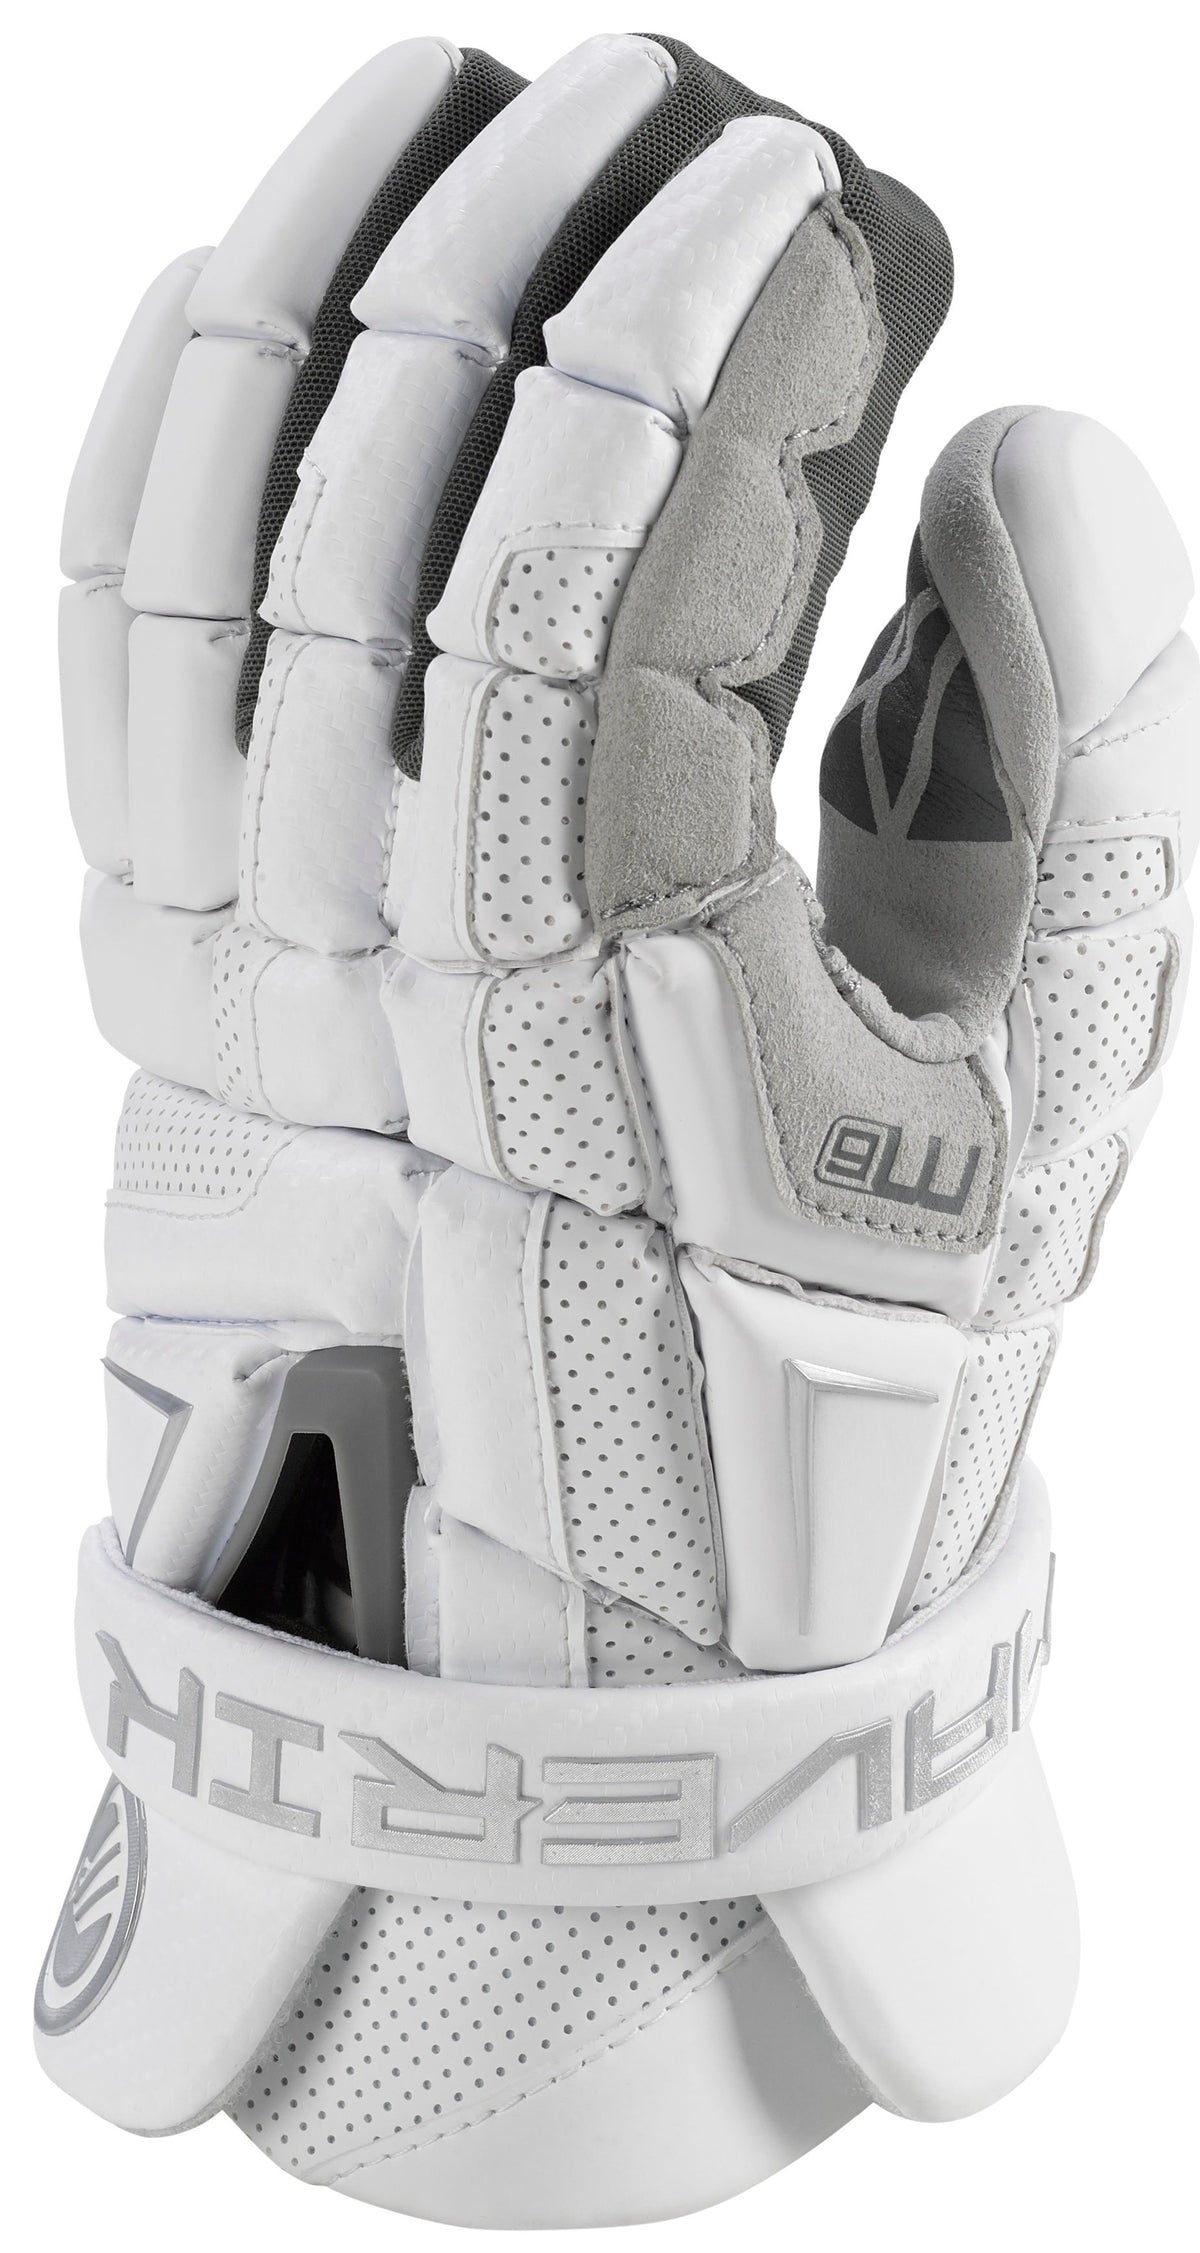 Maverik M6 2026 Senior Lacrosse Glove